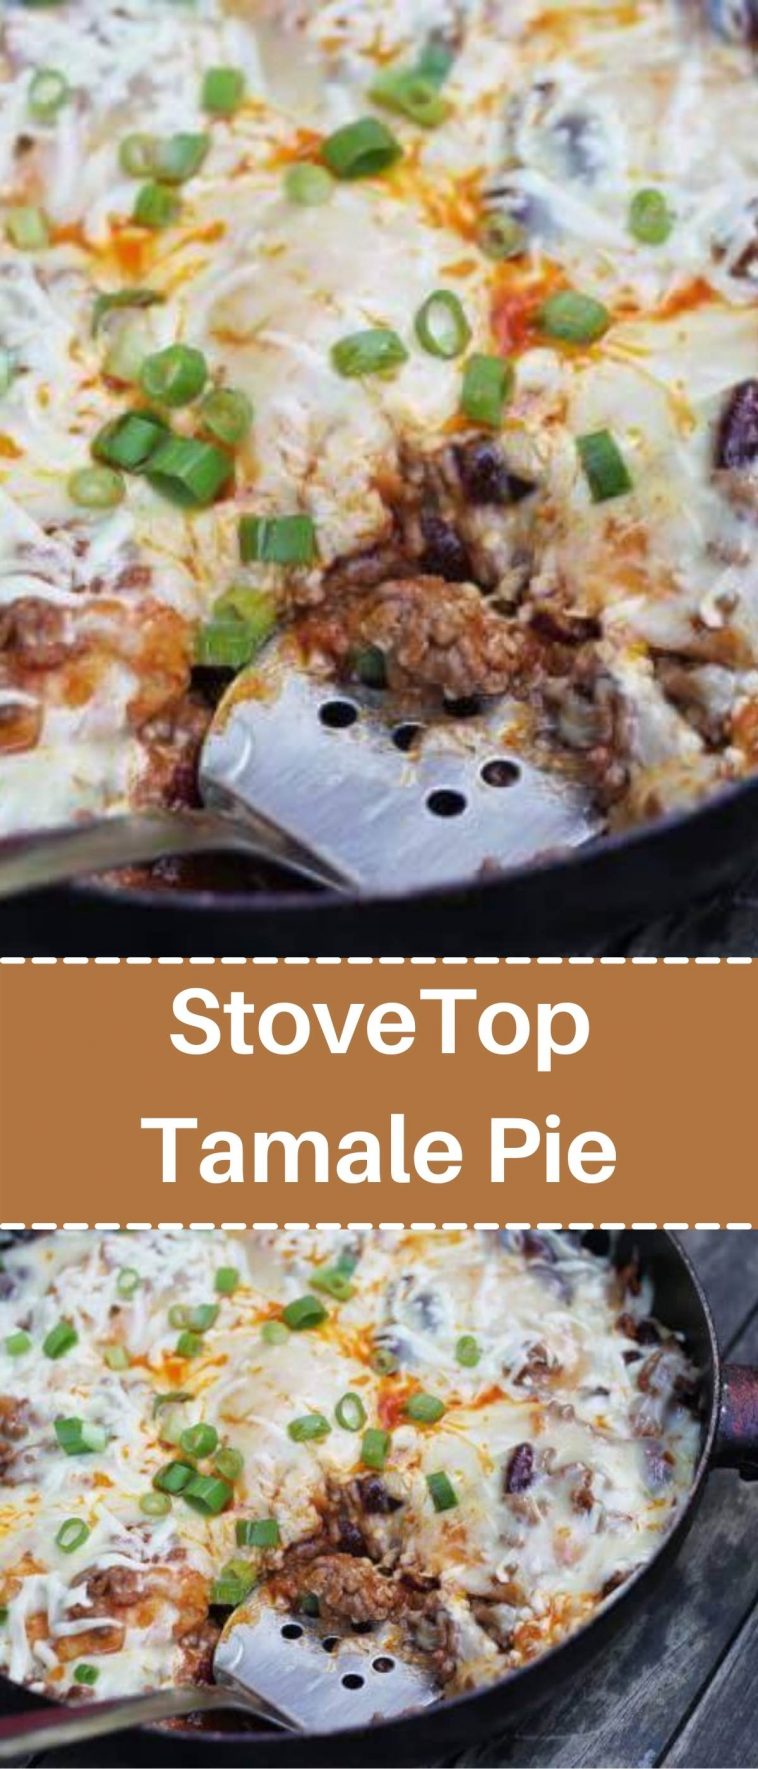 StoveTop Tamale Pie